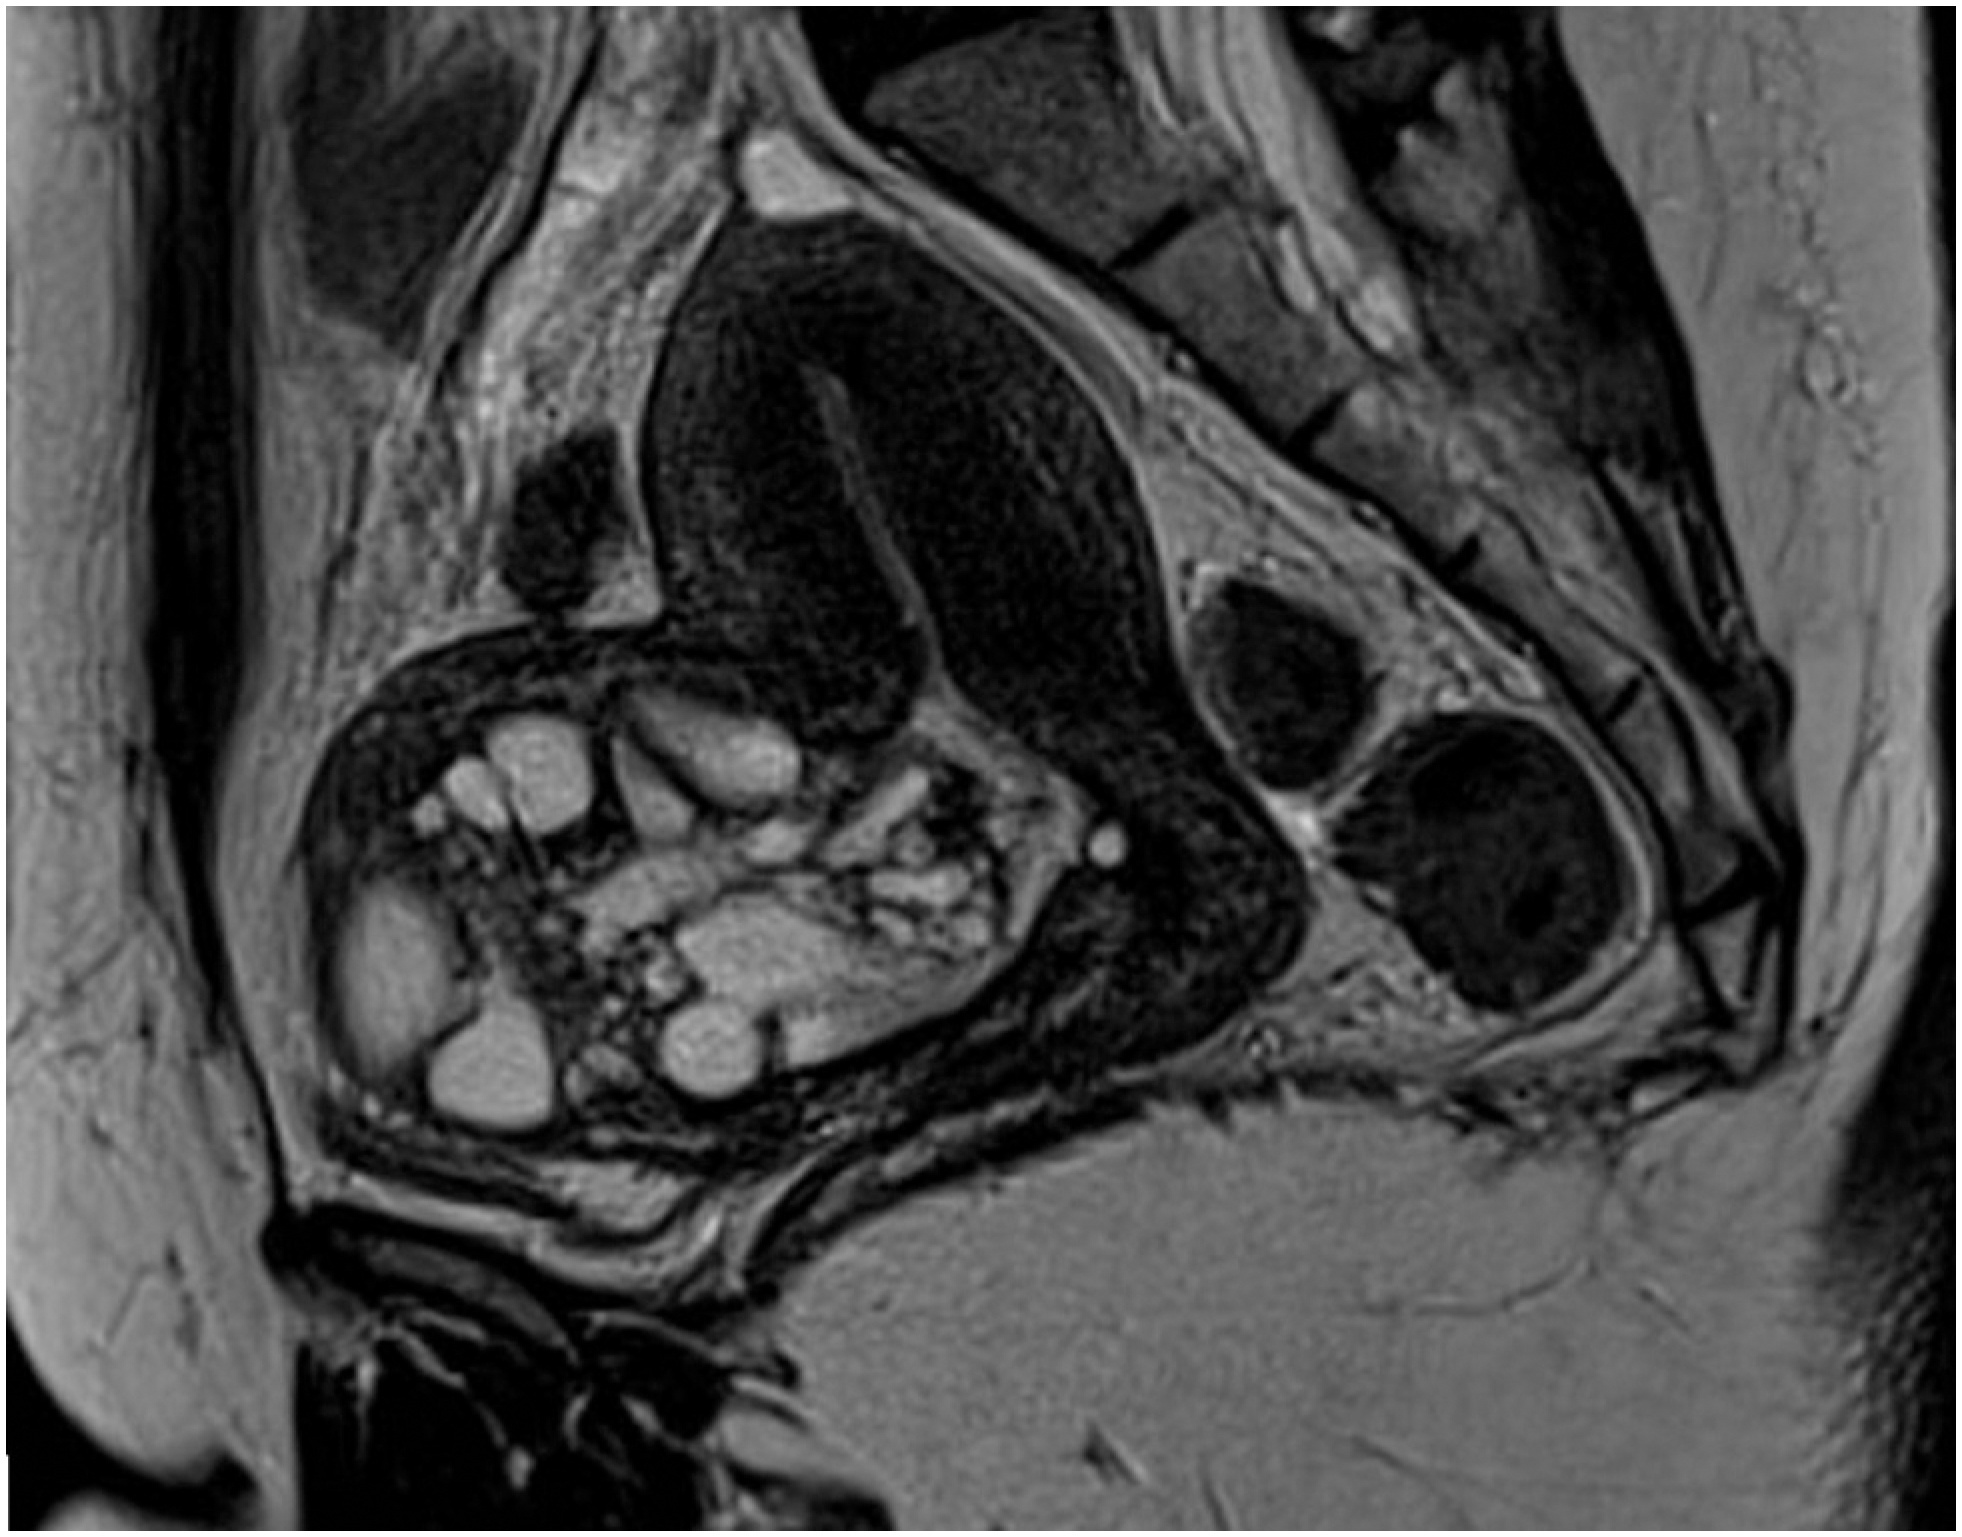 Mucinous Cystadenoma Arising in a Uterine Isthmocele: A Case Report